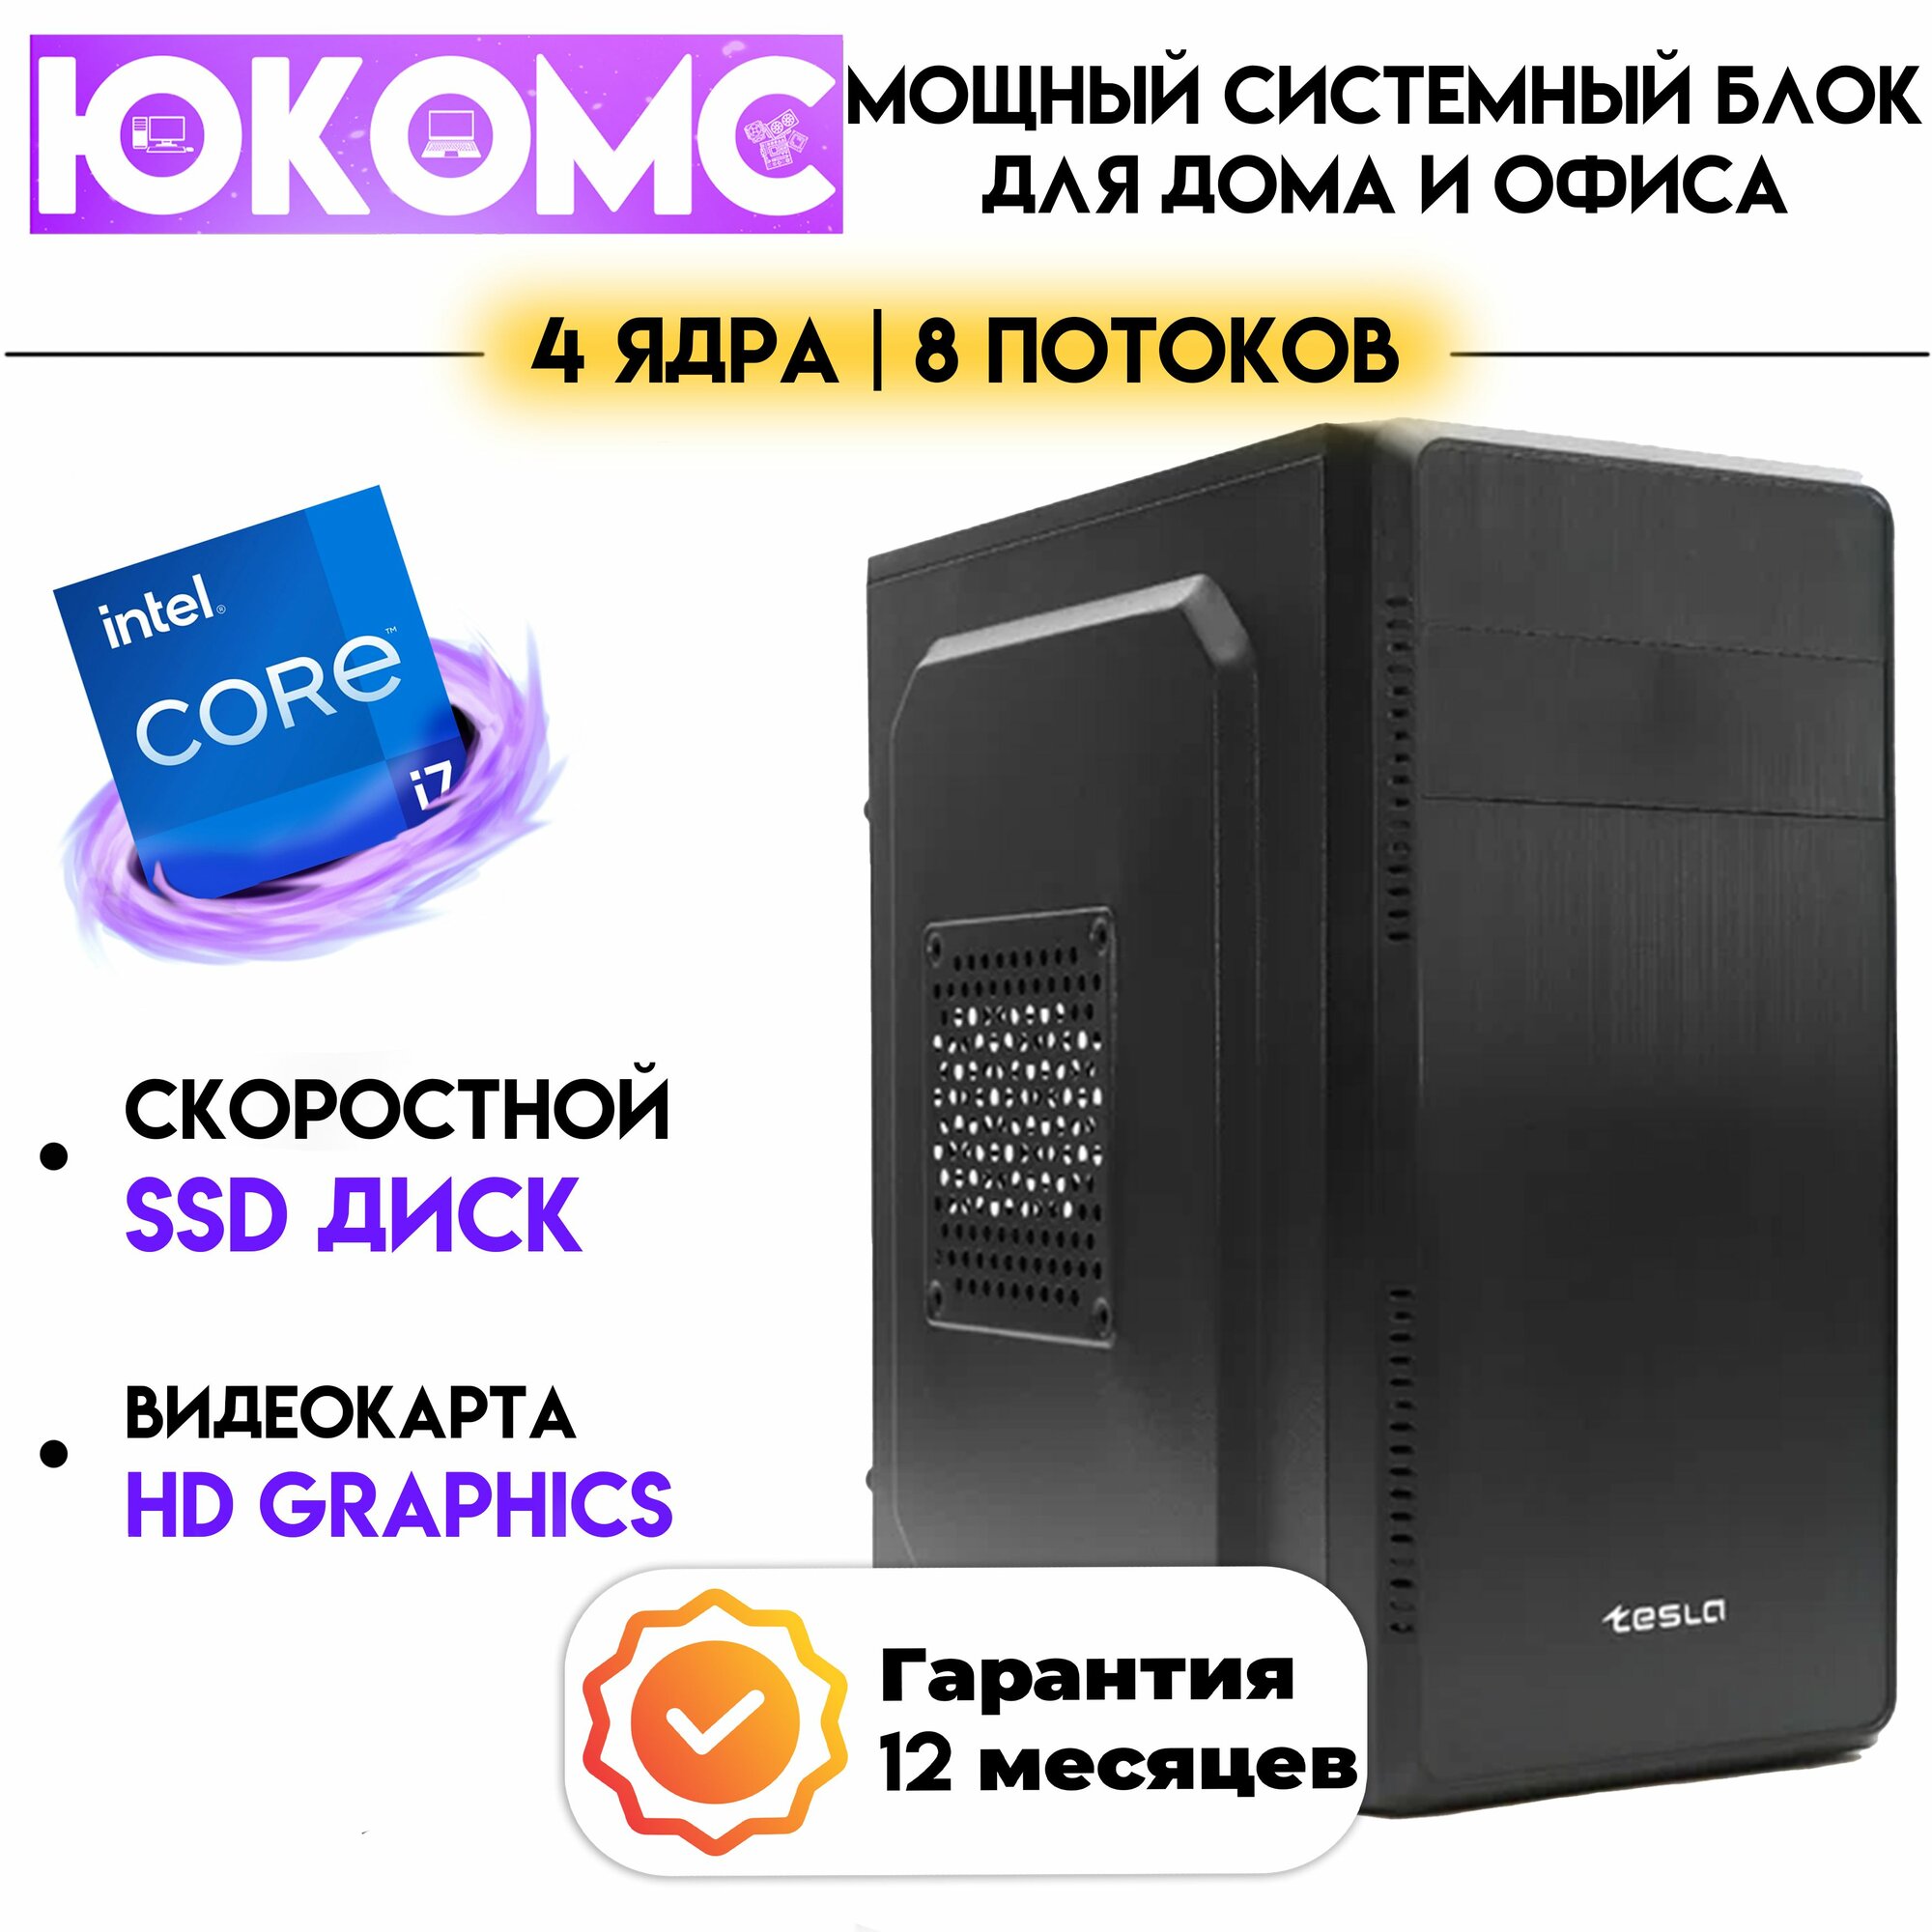 PC юкомс Core i7 2600, SSD 120GB, 8GB DDR3, БП 350W, win 10 pro, Classic black